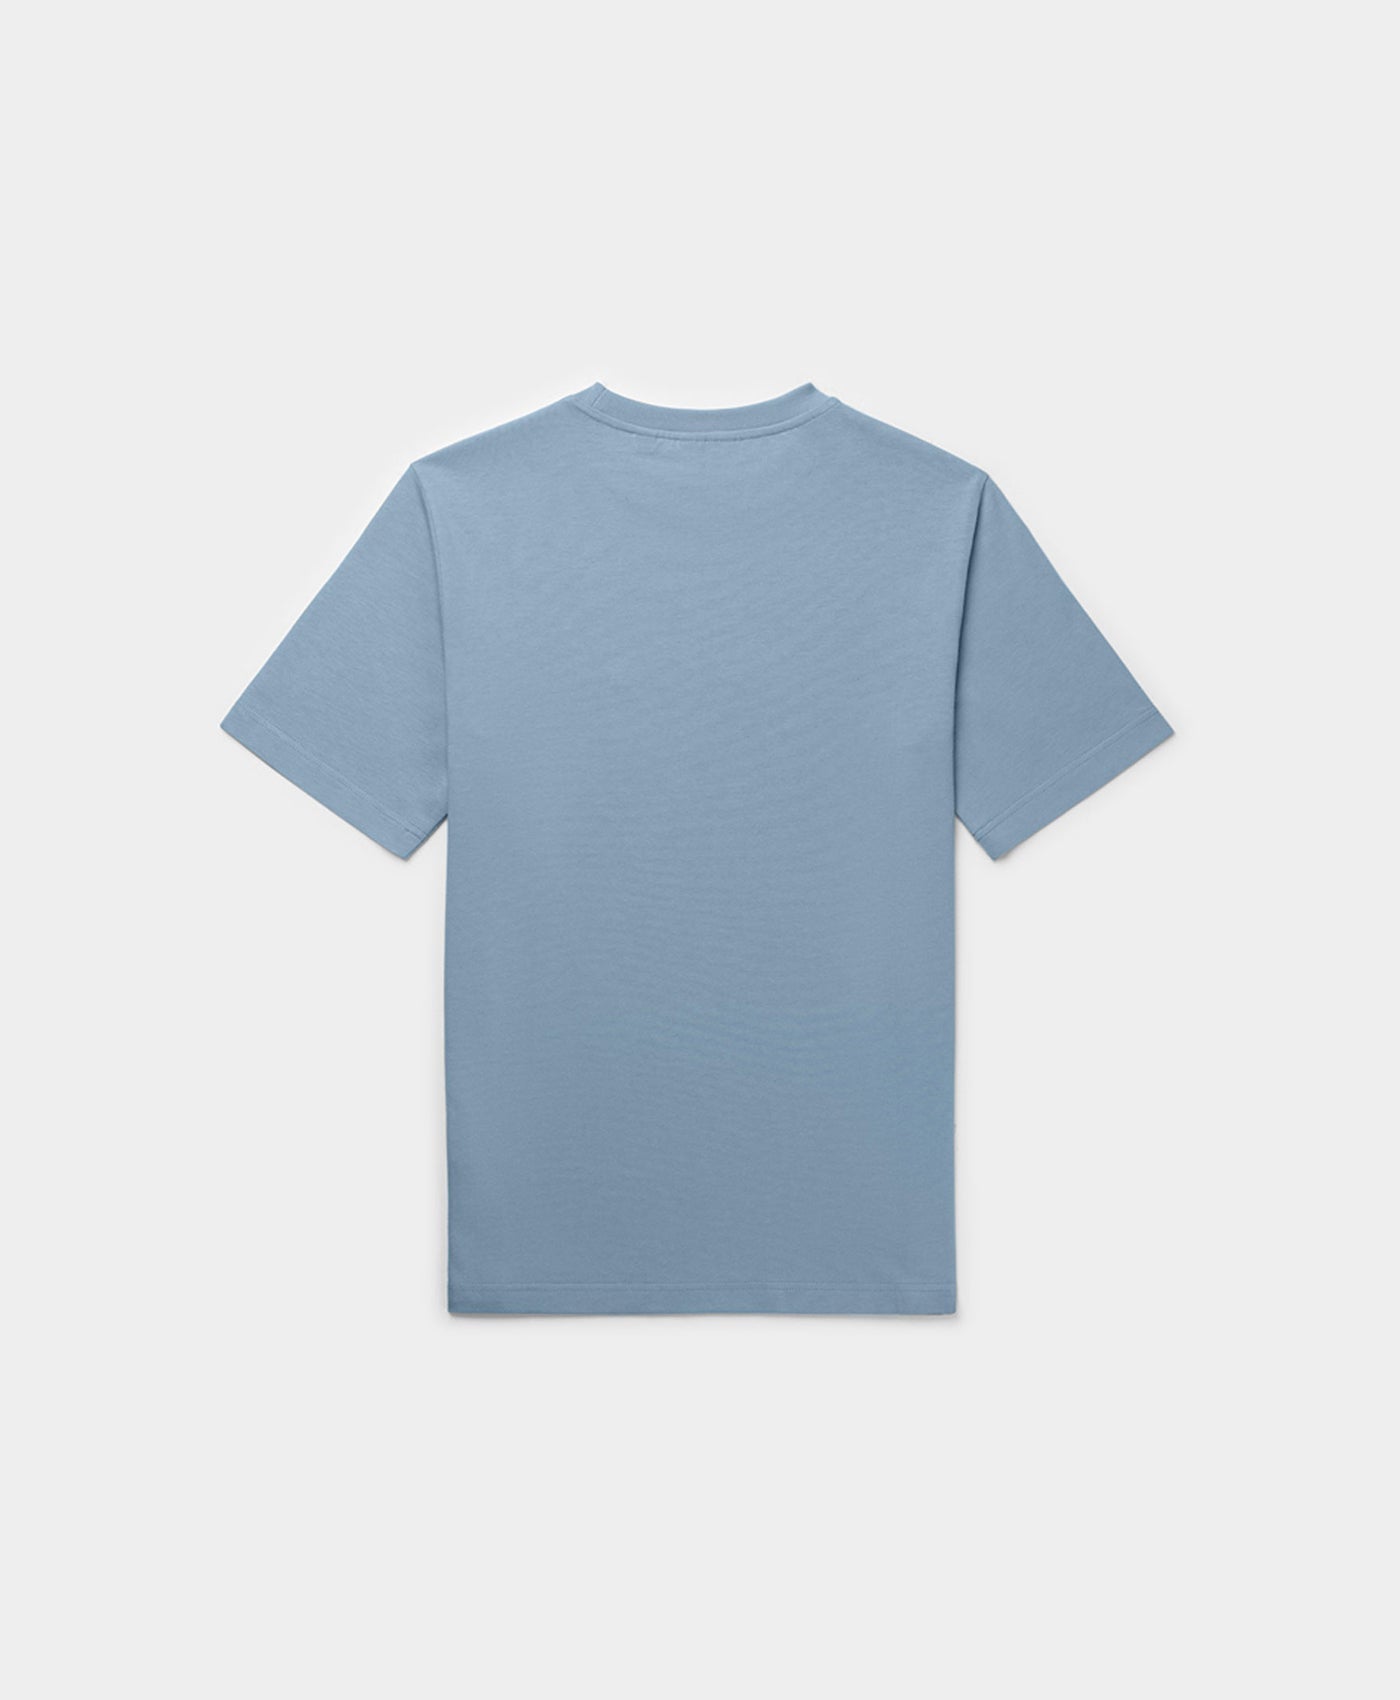 DP - Rainwashed Blue Escript T-Shirt - Packshot - Rear